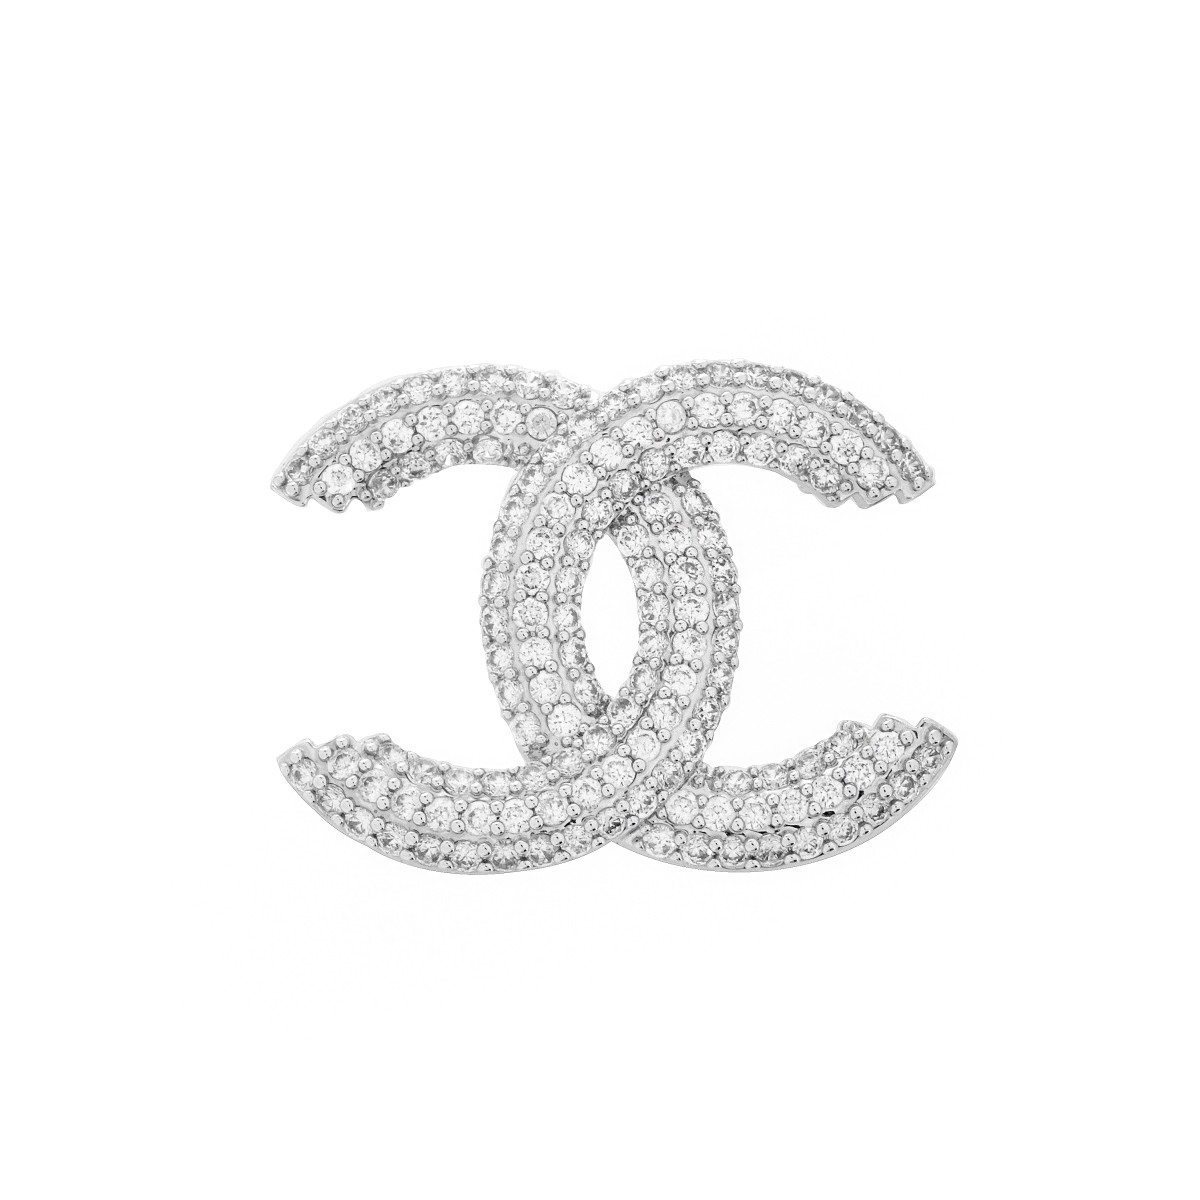 Chanel style Logo Brooch